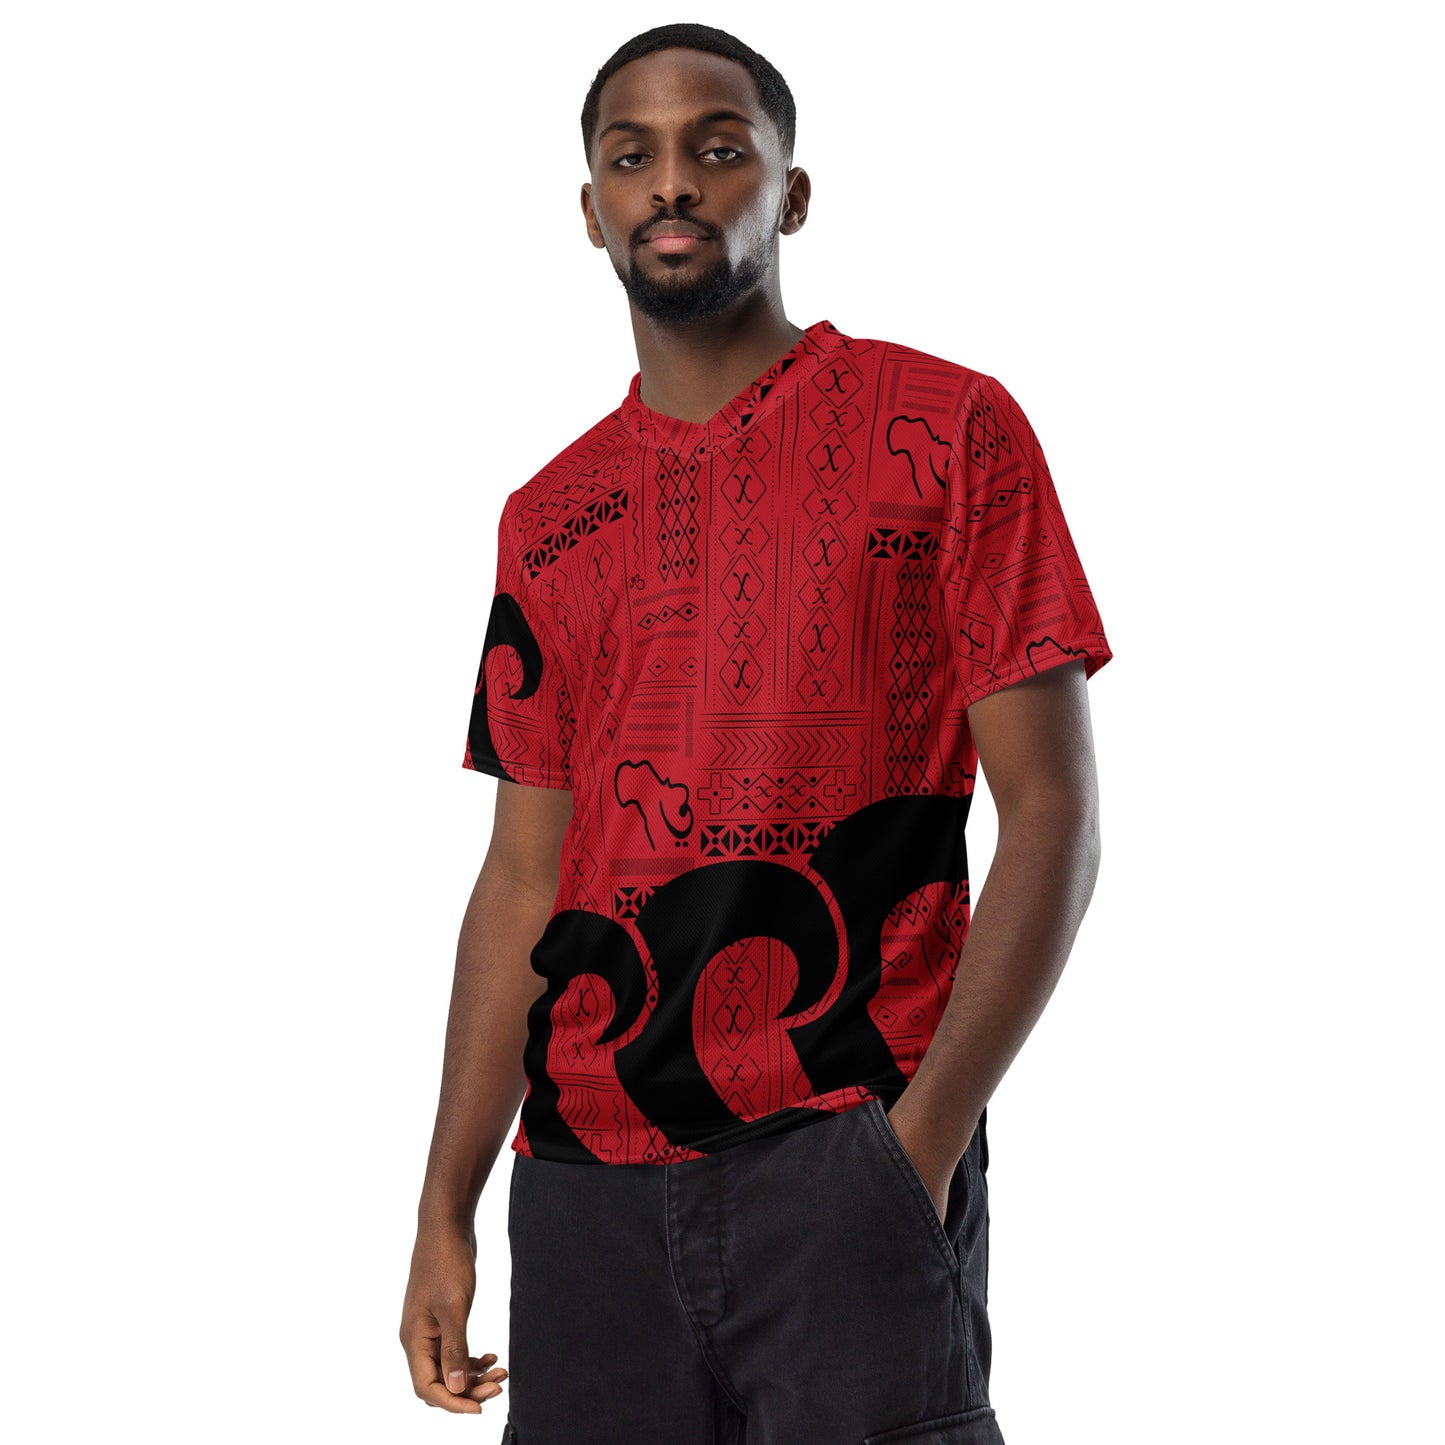 AfriBix Tribal print recycled unisex sports jersey